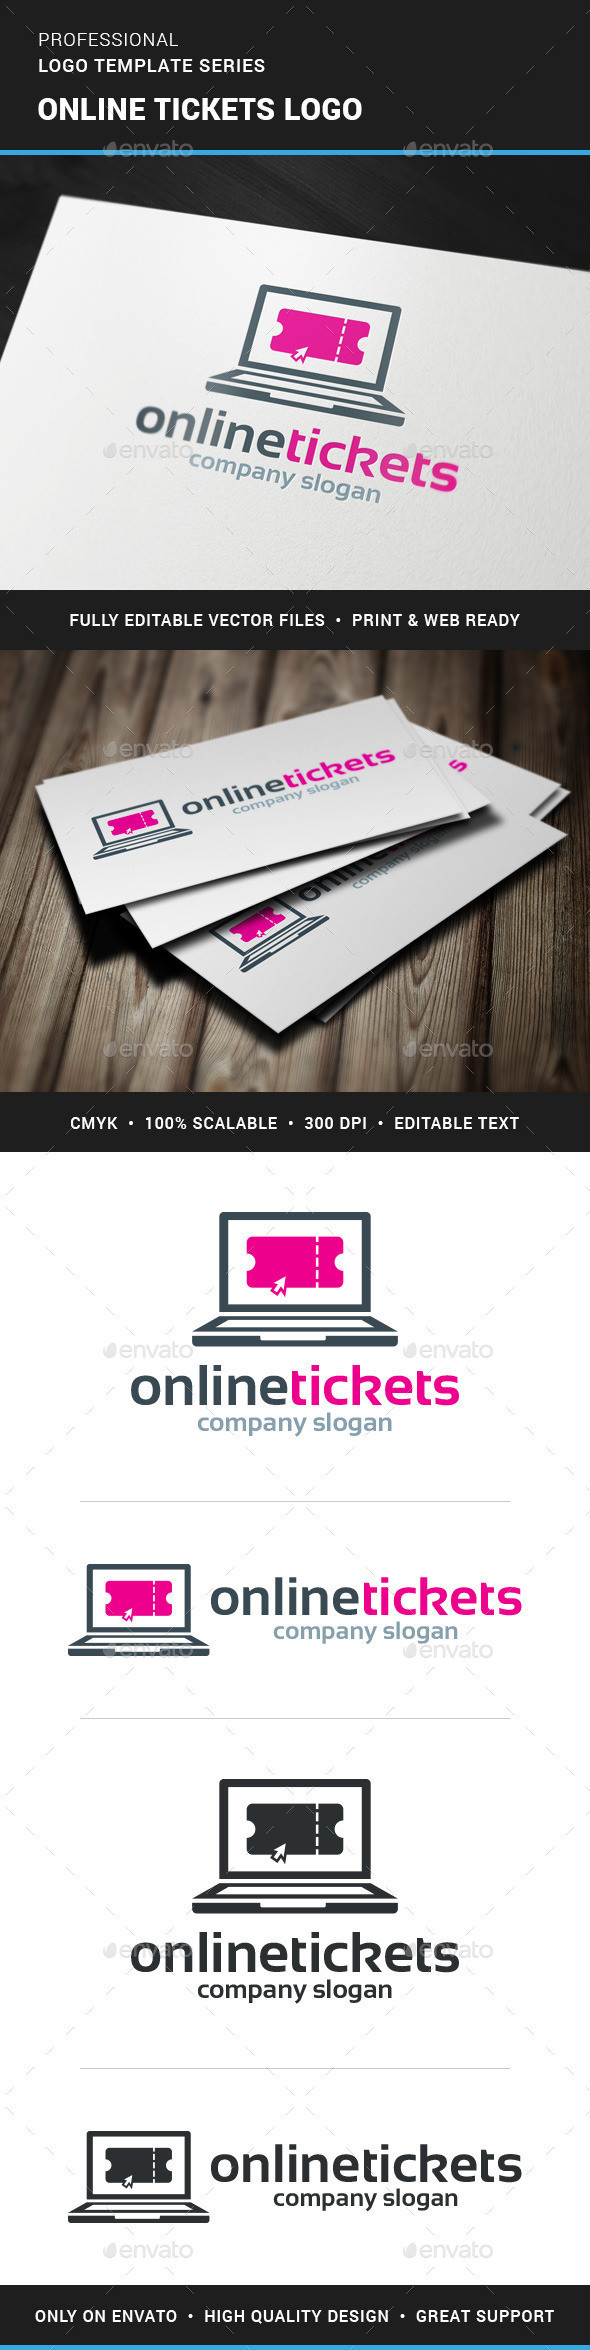 Online tickets logo template